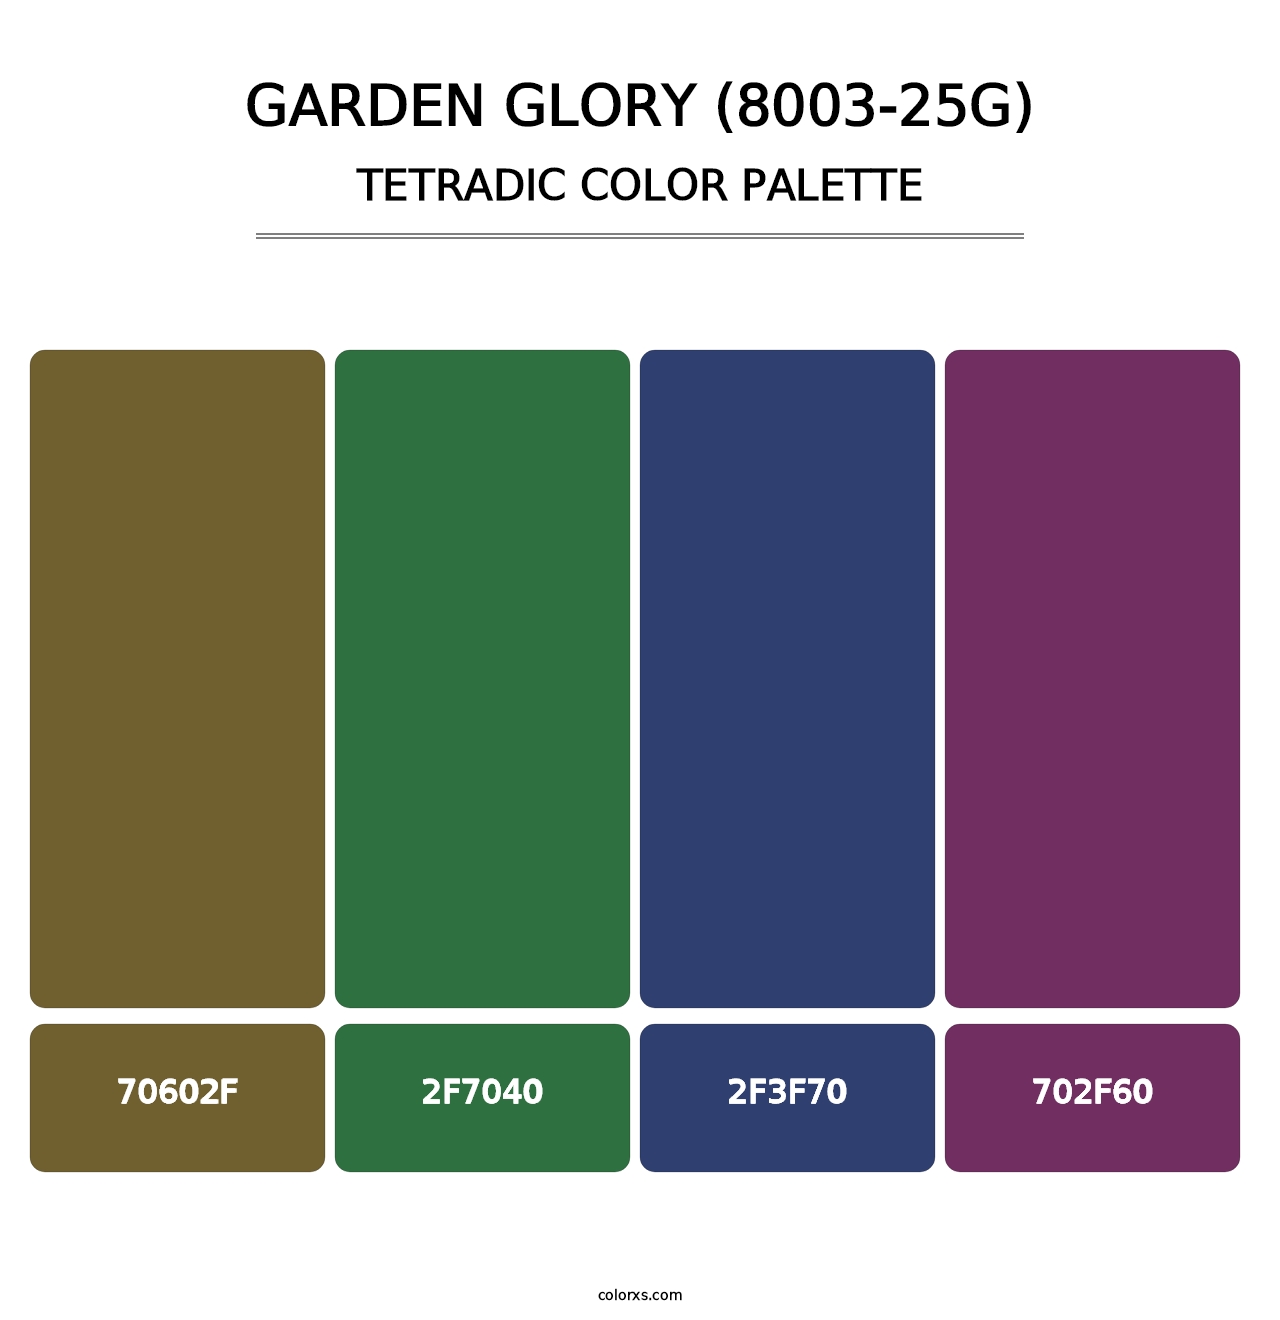 Garden Glory (8003-25G) - Tetradic Color Palette